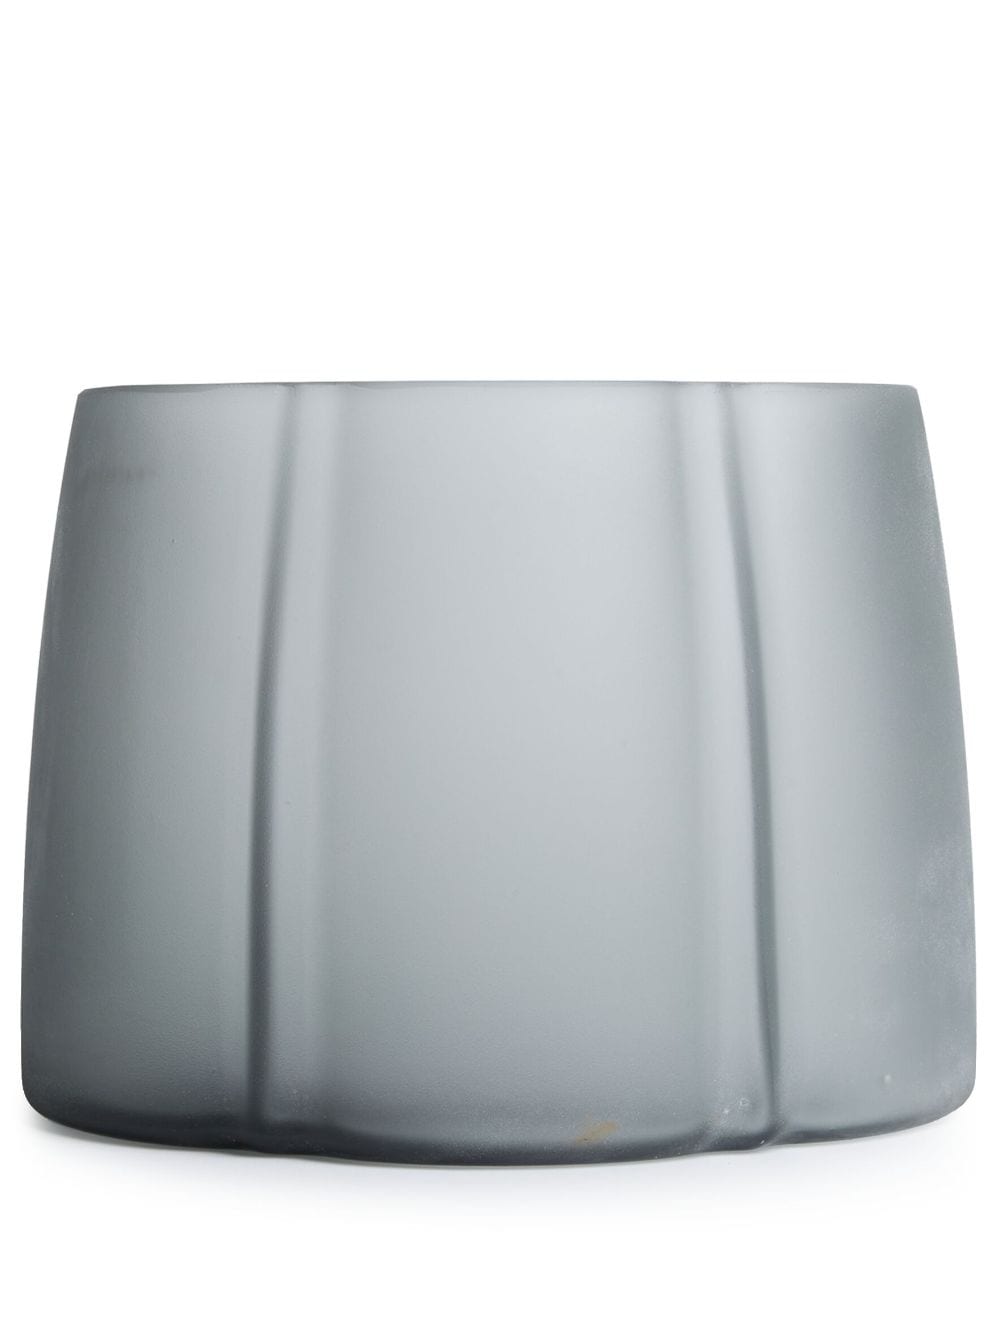 Serax Shape 03 Vase In Grey